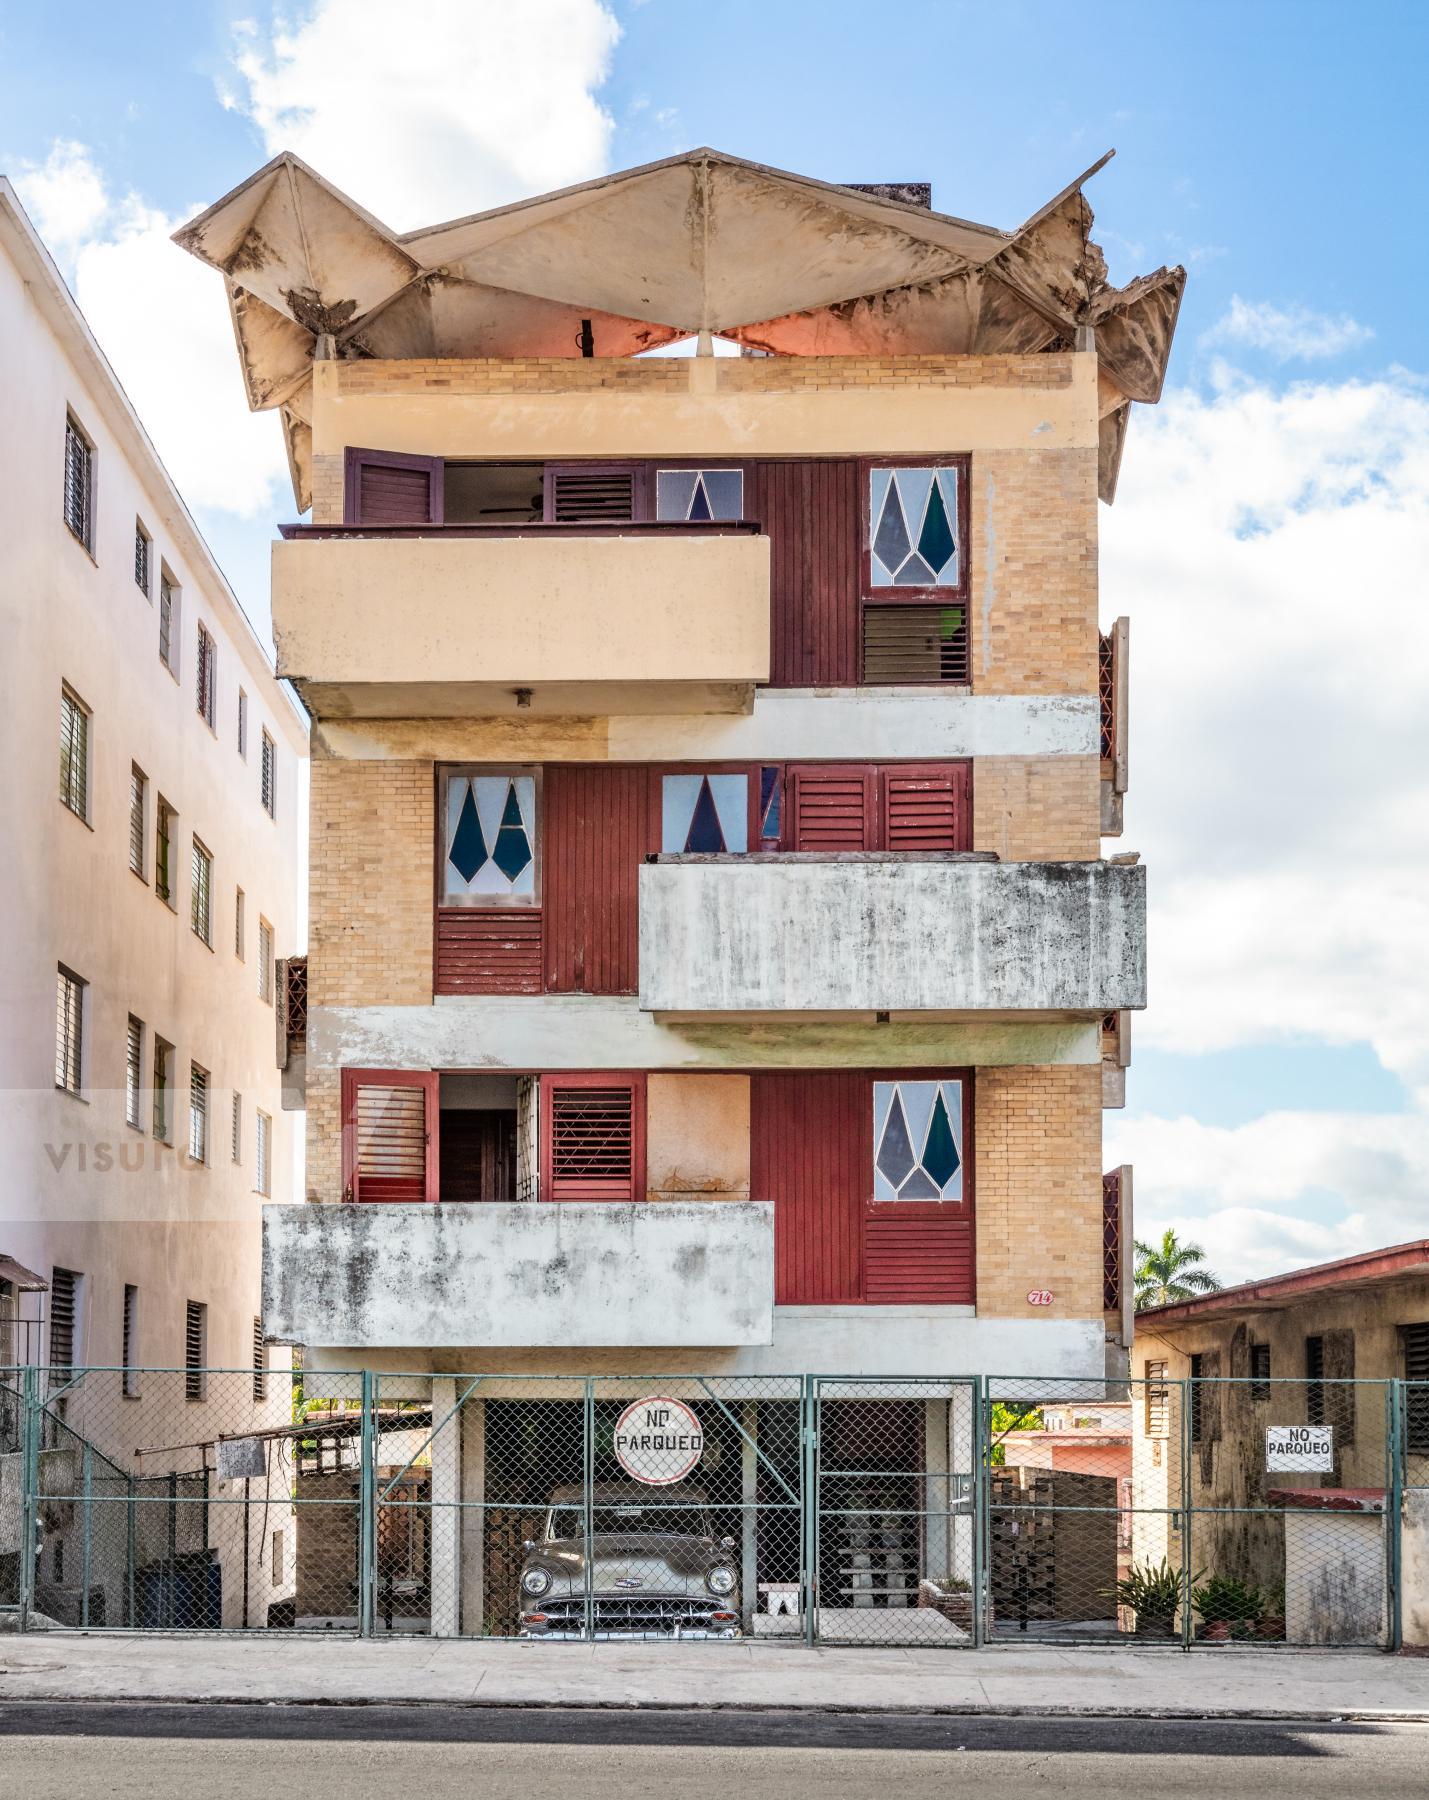 Purchase Apartment Building of Reynaldo Cue, Havana Cuba by Silvia Ros